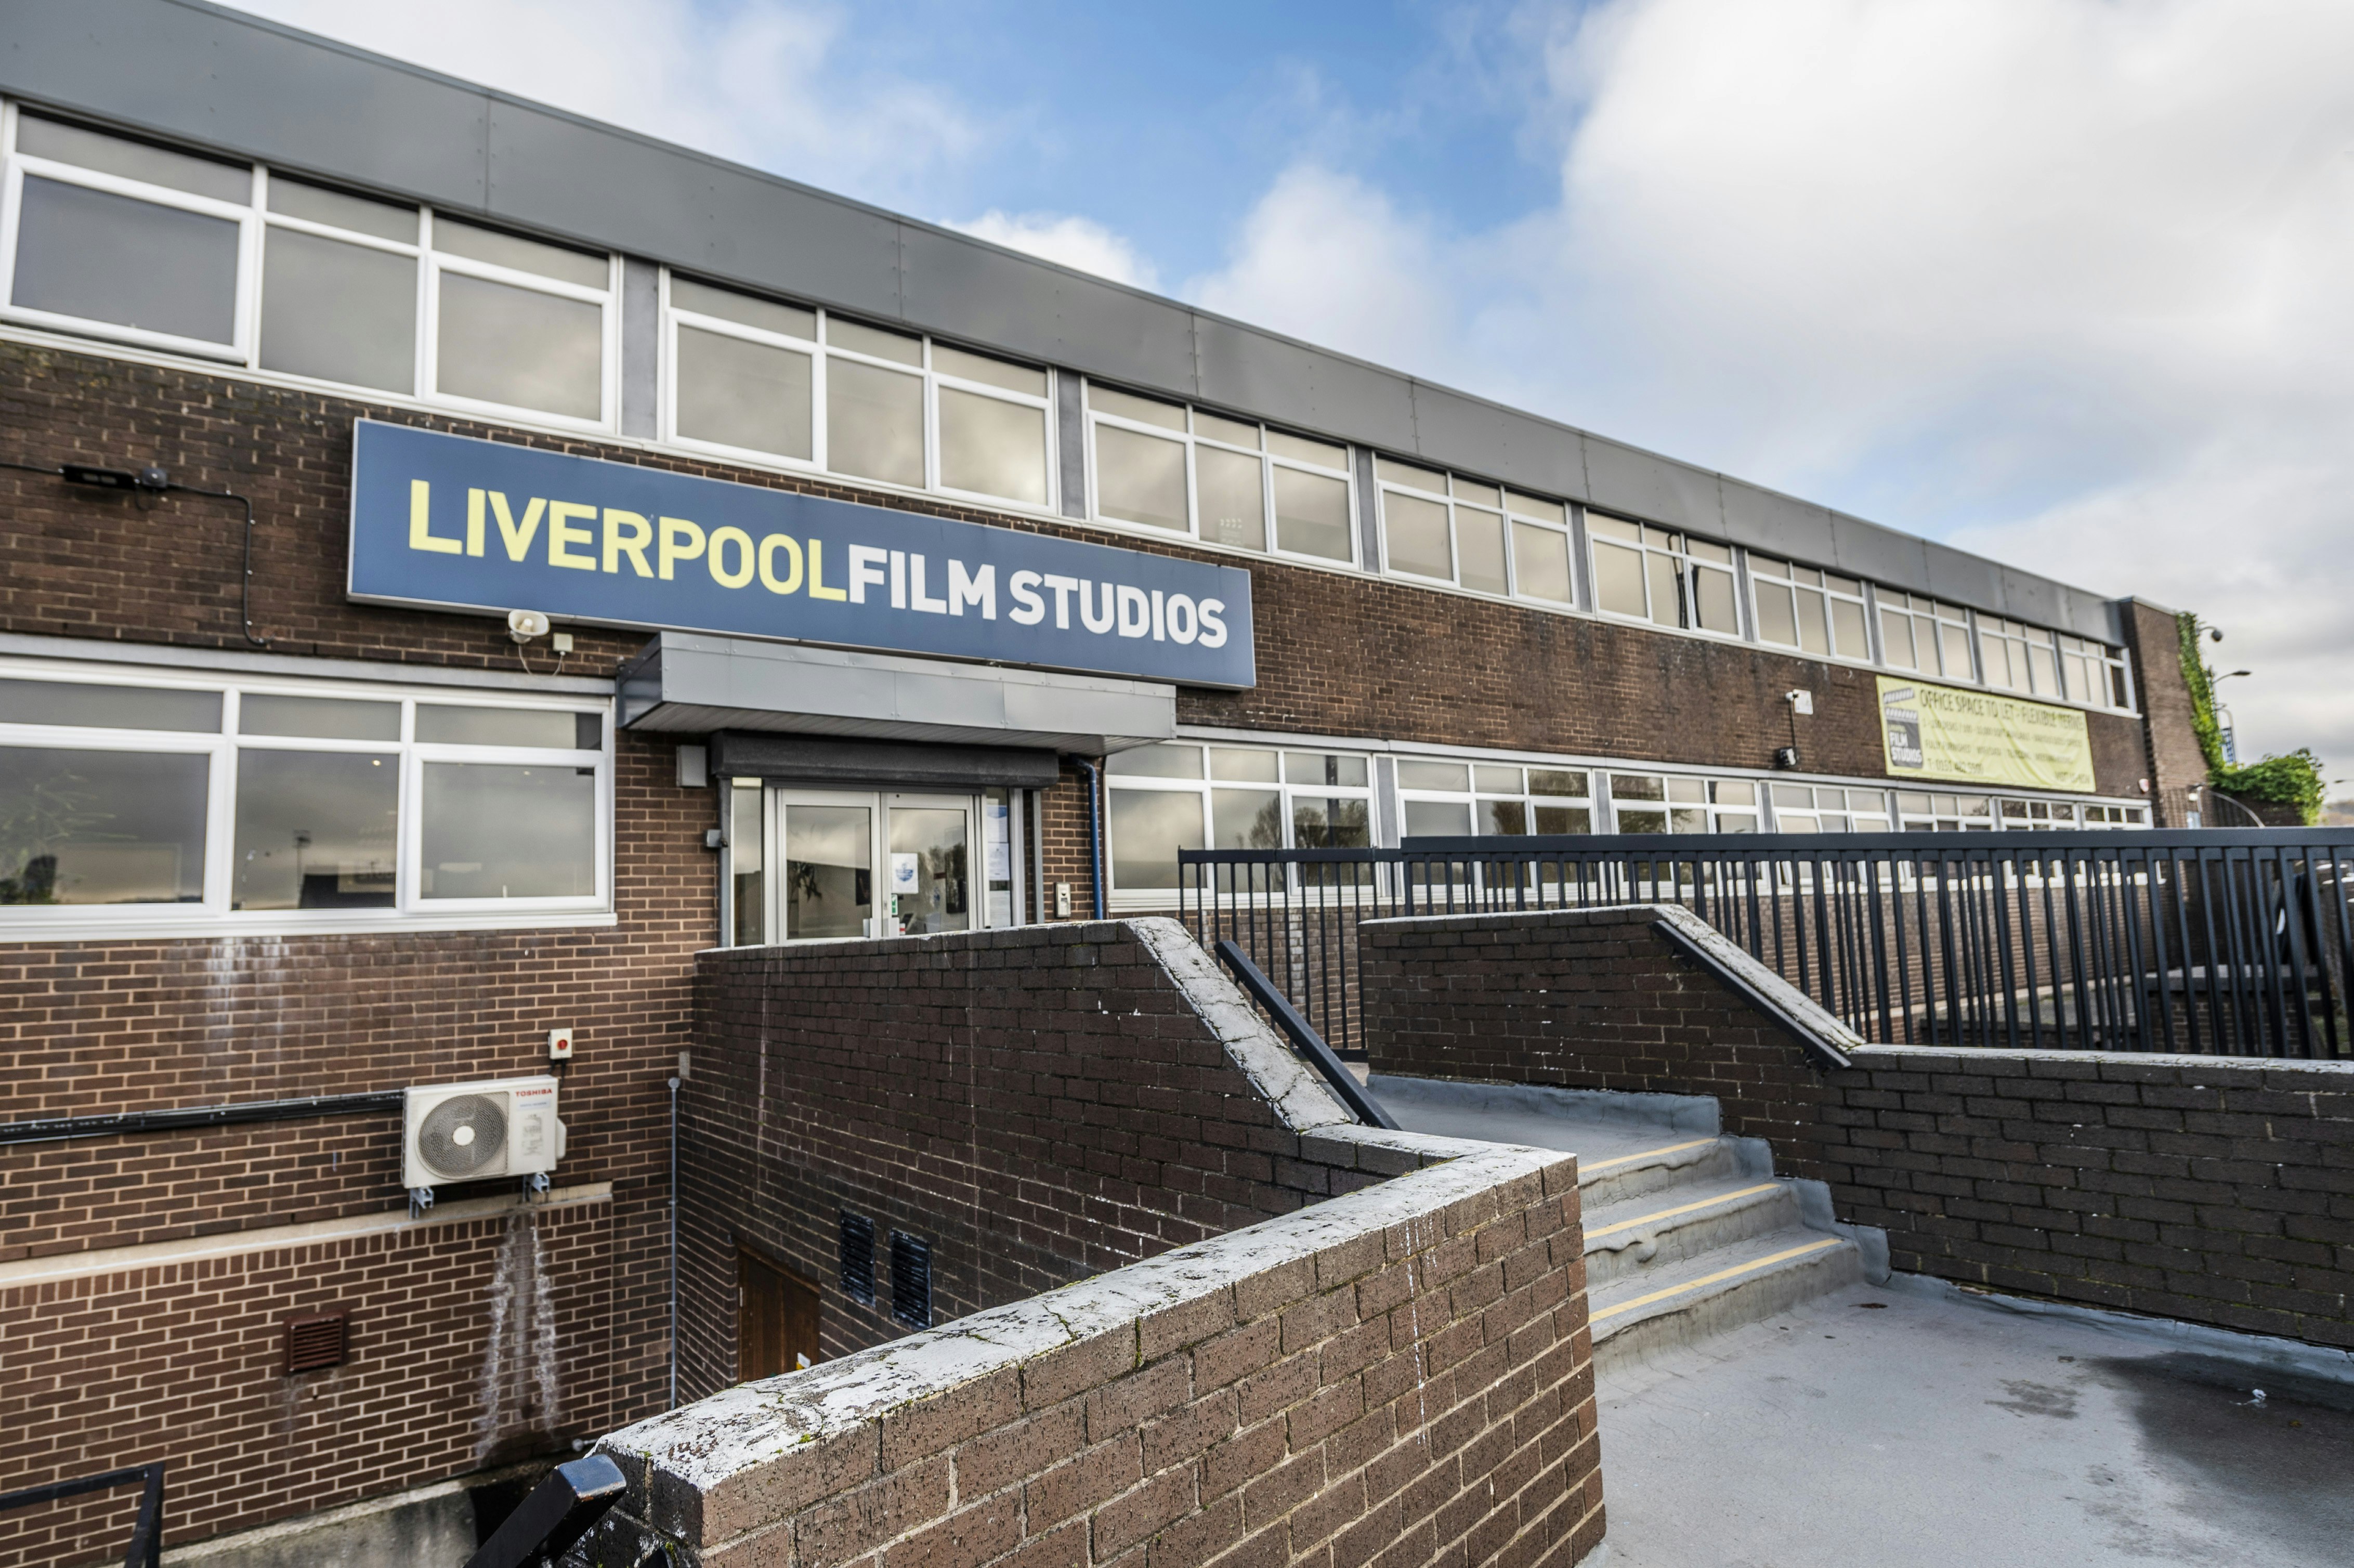 Filming Locations Venues in Liverpool - The Liverpool Film Studios